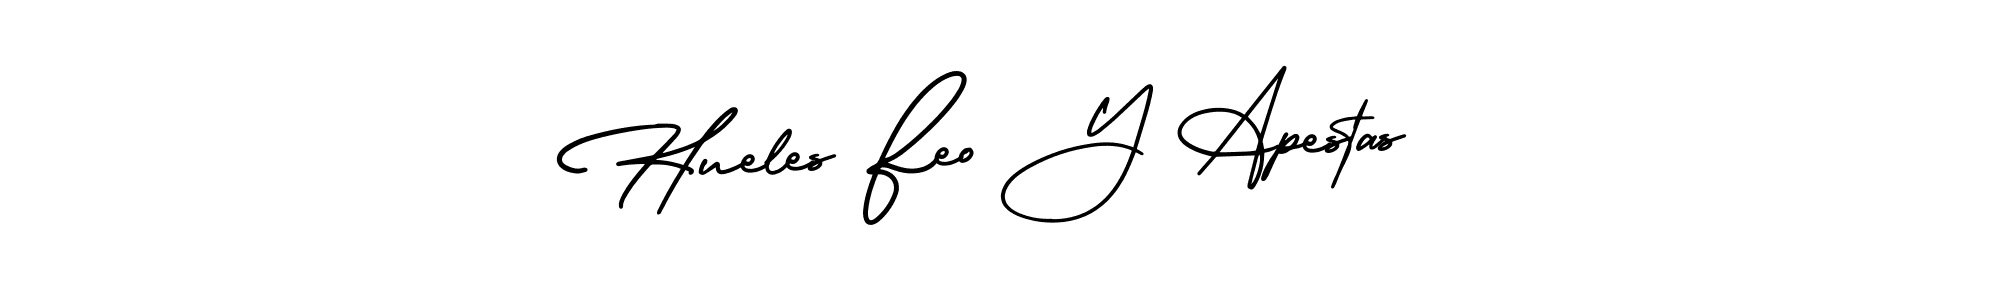 Best and Professional Signature Style for Hueles Feo Y Apestas. AmerikaSignatureDemo-Regular Best Signature Style Collection. Hueles Feo Y Apestas signature style 3 images and pictures png